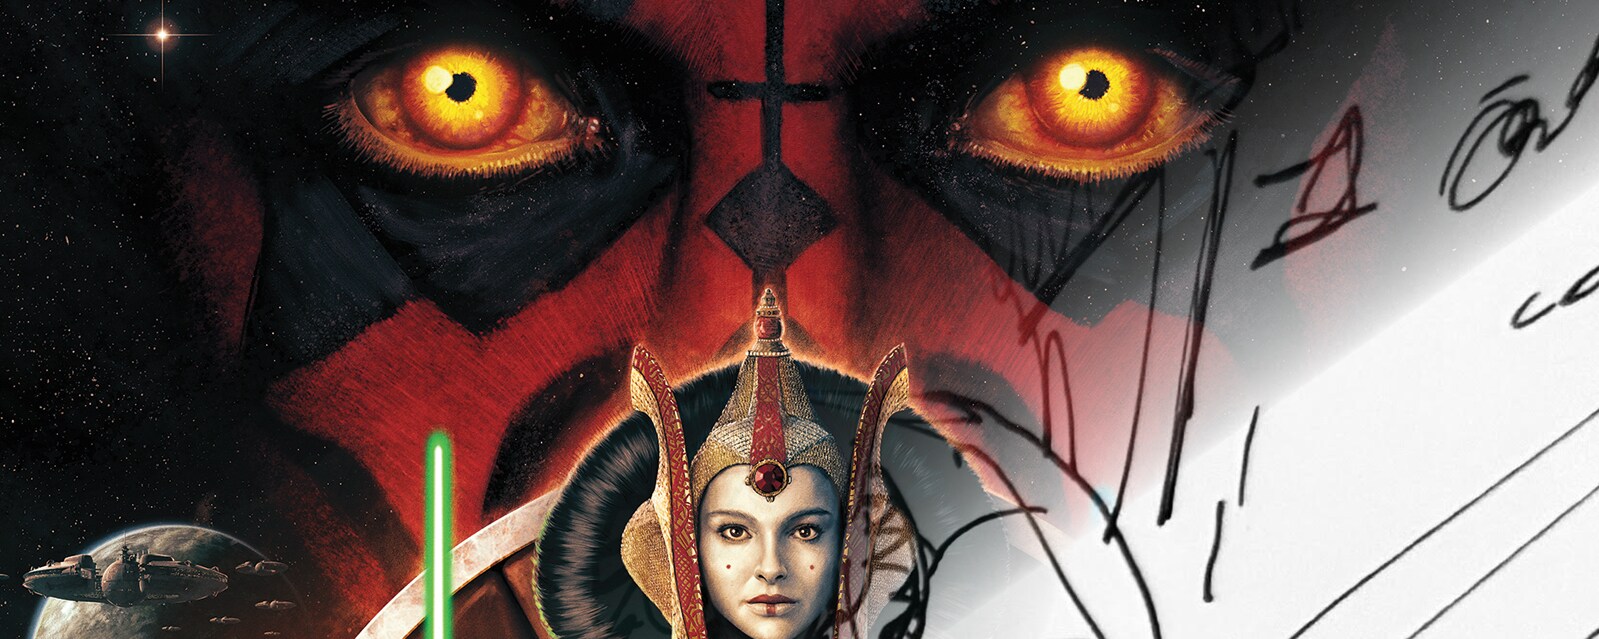 Matt Ferguson's Star Wars: The Phantom Menace 25th Anniversary poster and sketches